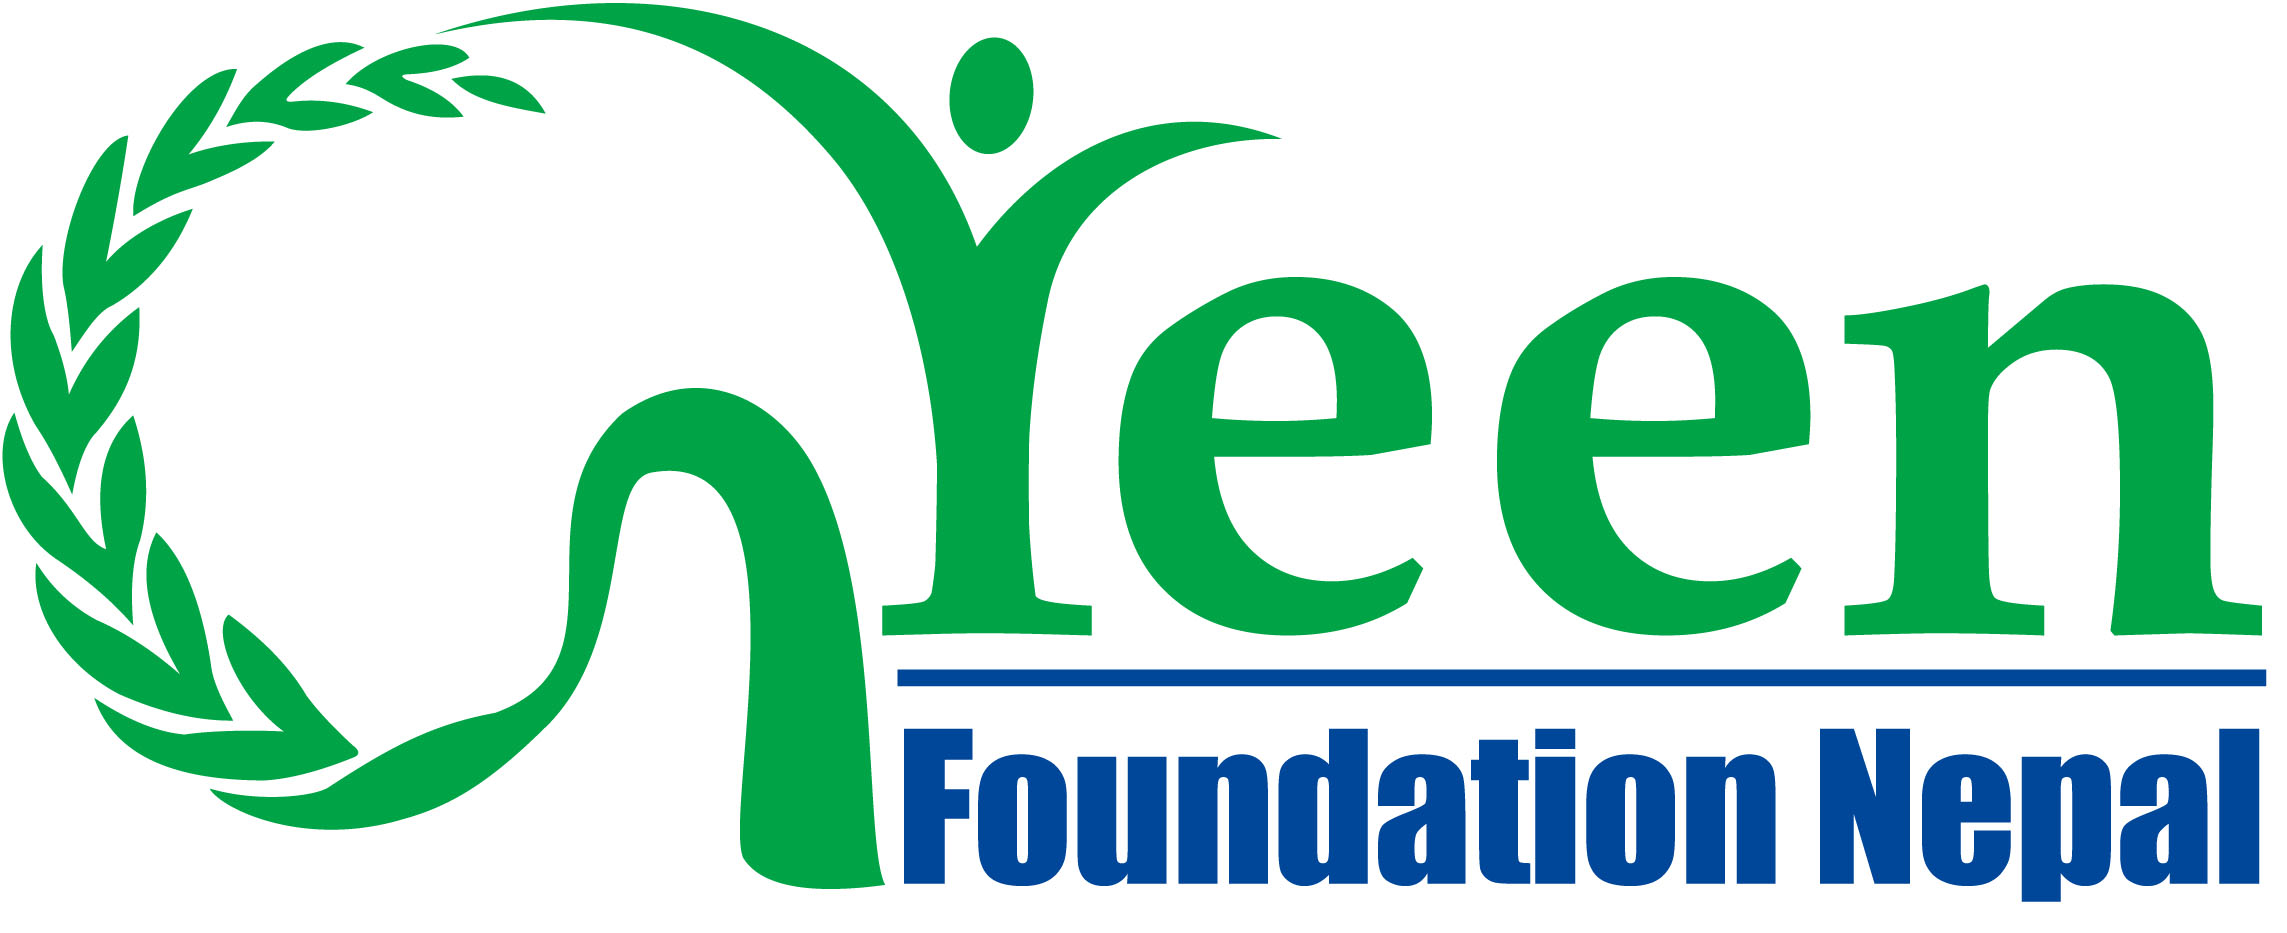 Green Foundation Nepal